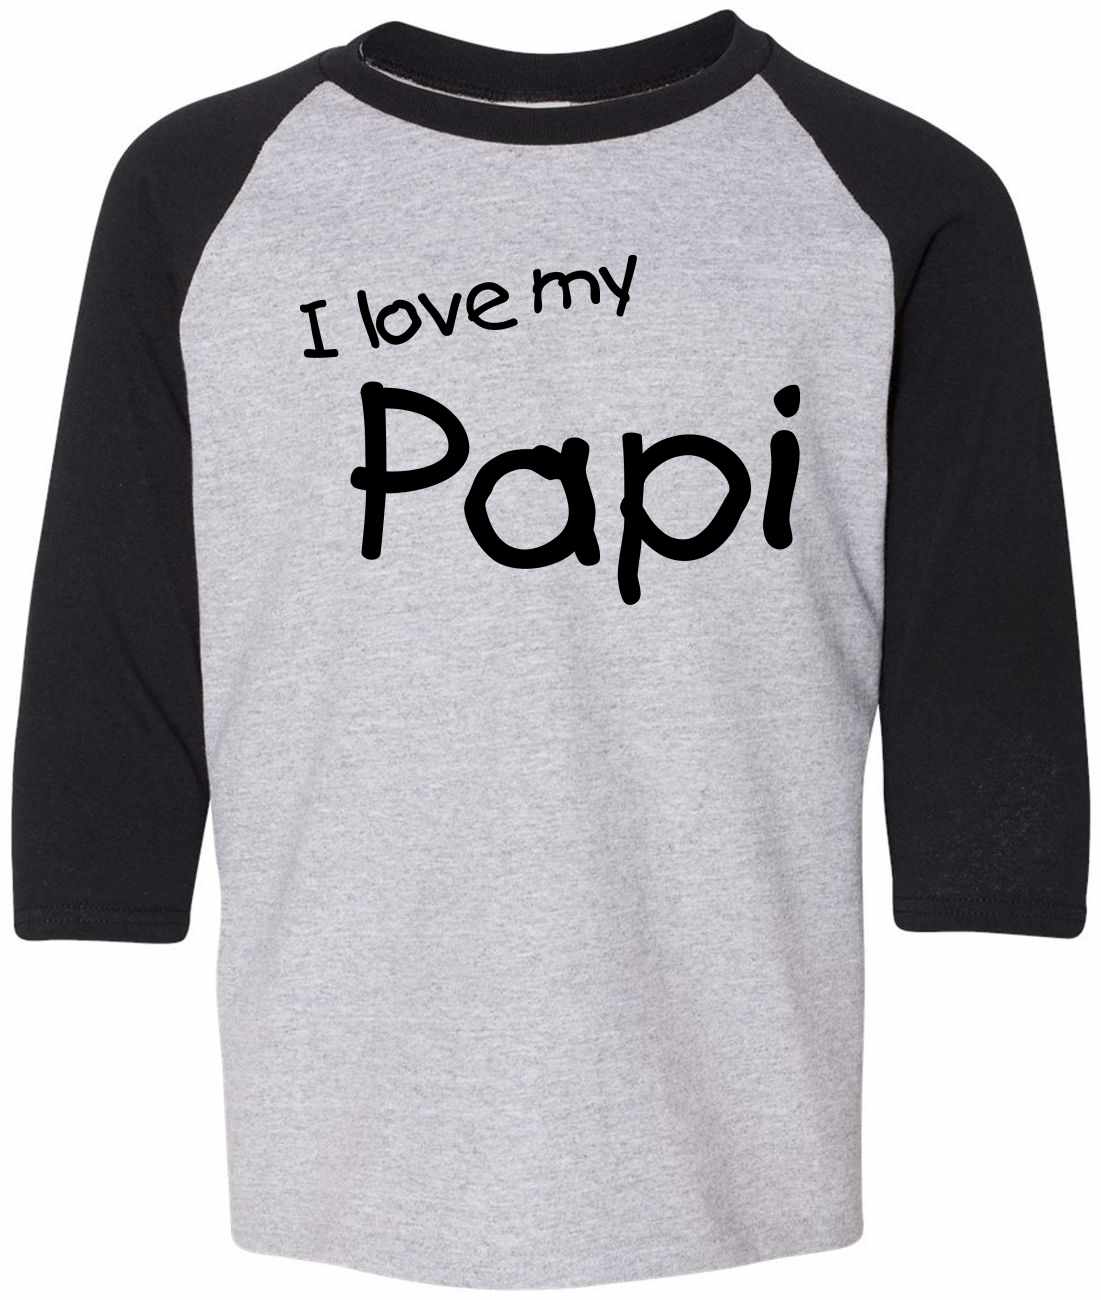 I Love My Papi on Youth Baseball Shirt (#1126-212)